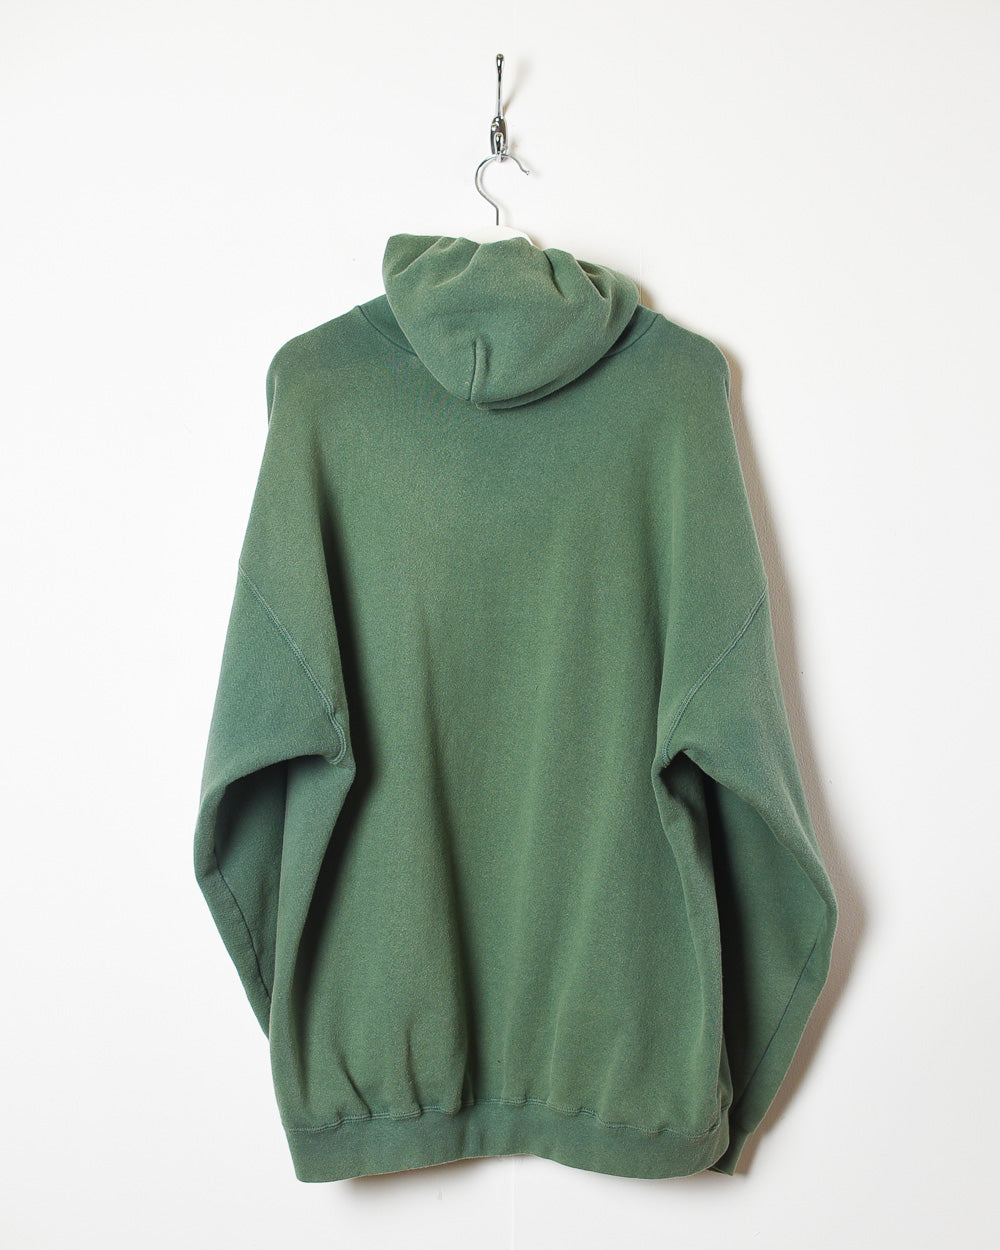 Green Nike Sweatshirt - XX-Large